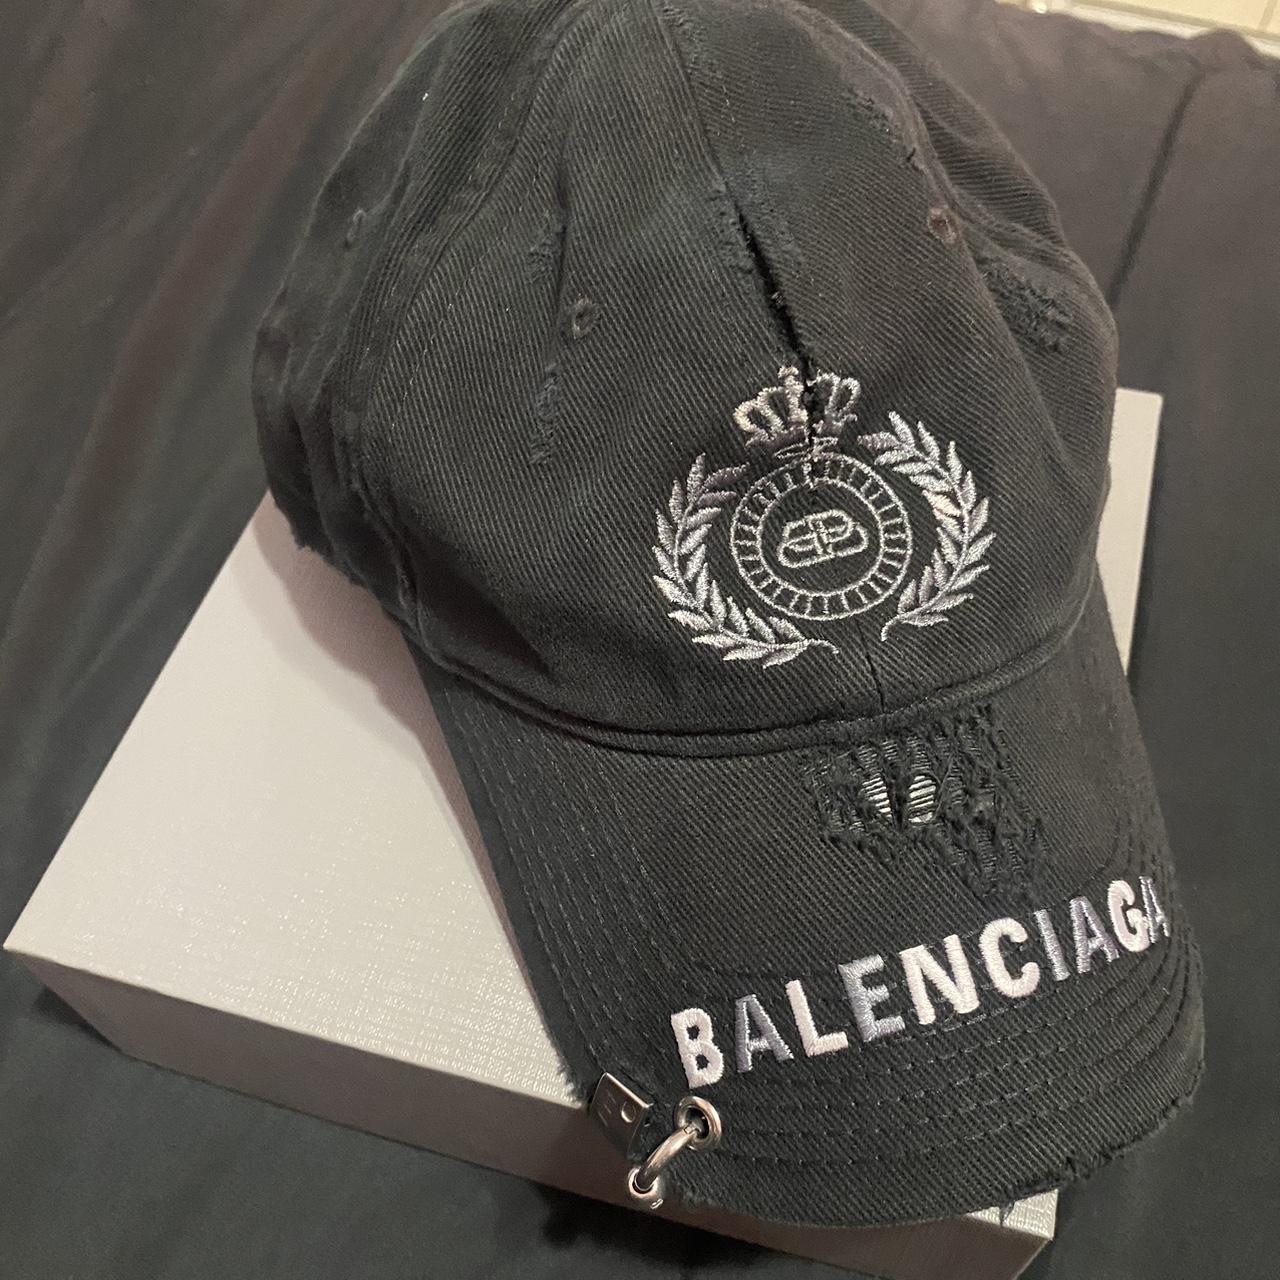 Balenciaga Men's Black Hat